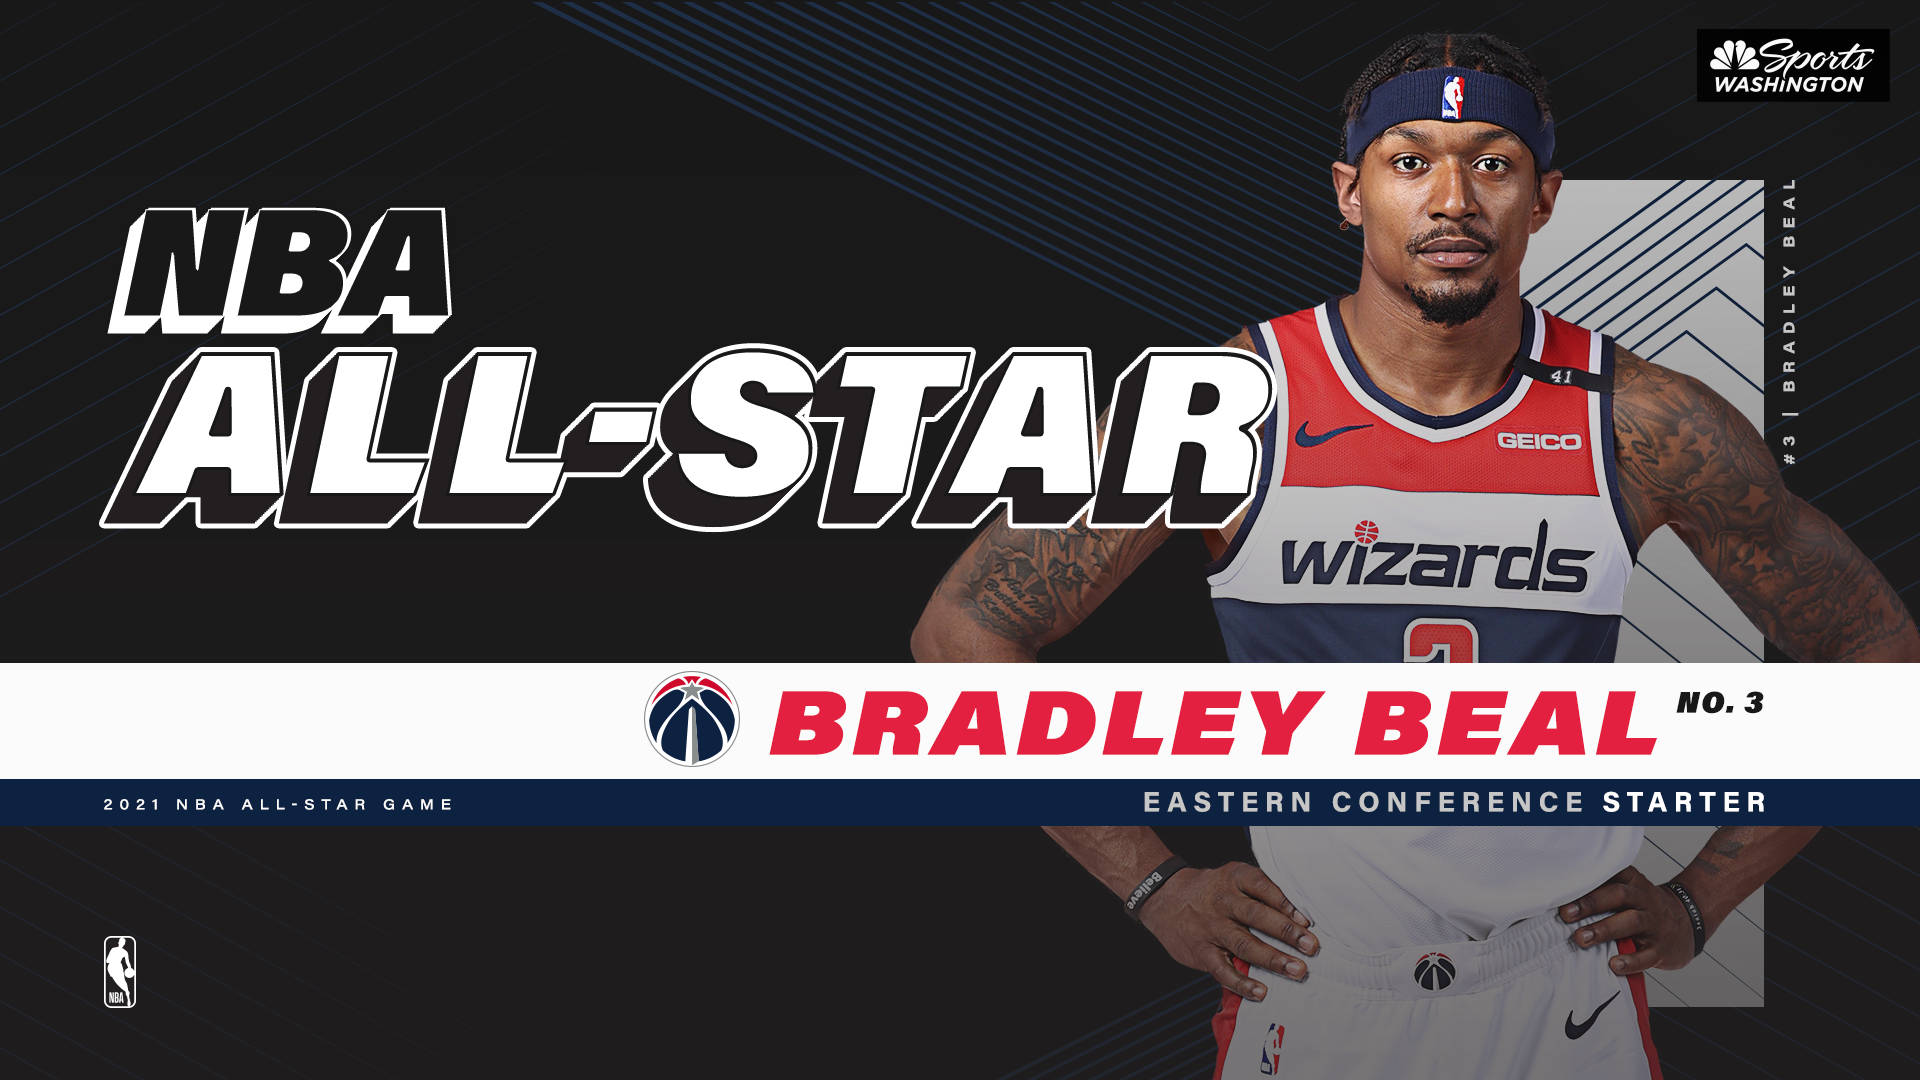 Bradley Beal NBA All-Star Player Wallpaper